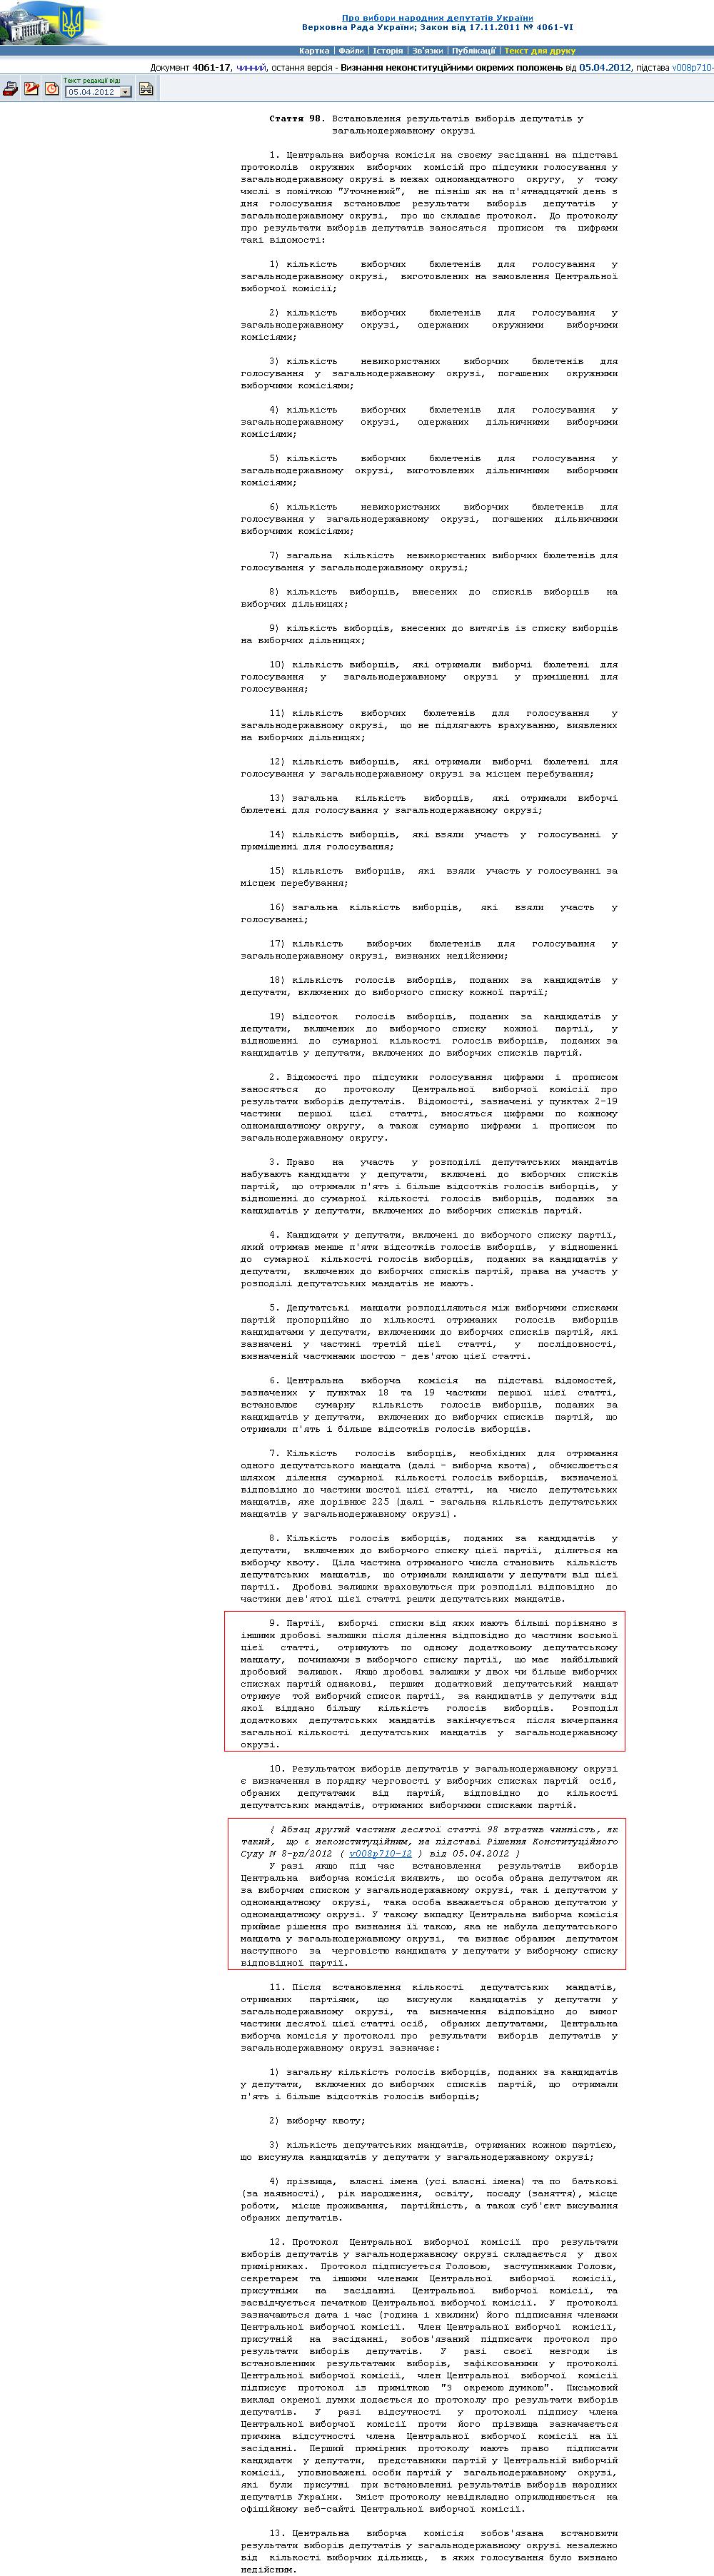 http://zakon3.rada.gov.ua/laws/show/4061-17/page9